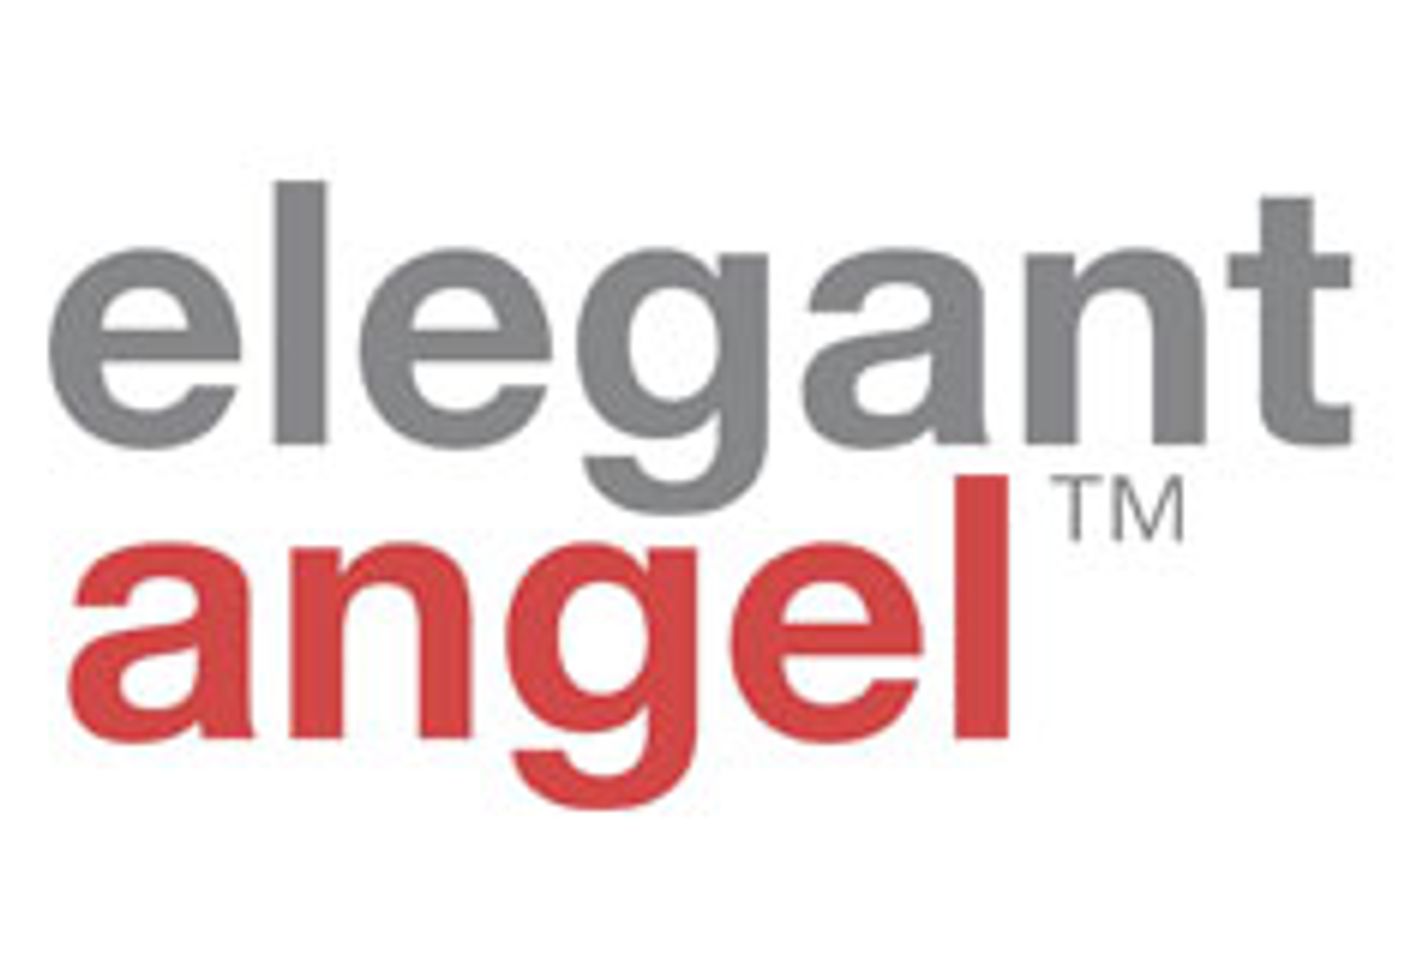 Elegant Angel Ships and Streets New Releases for September